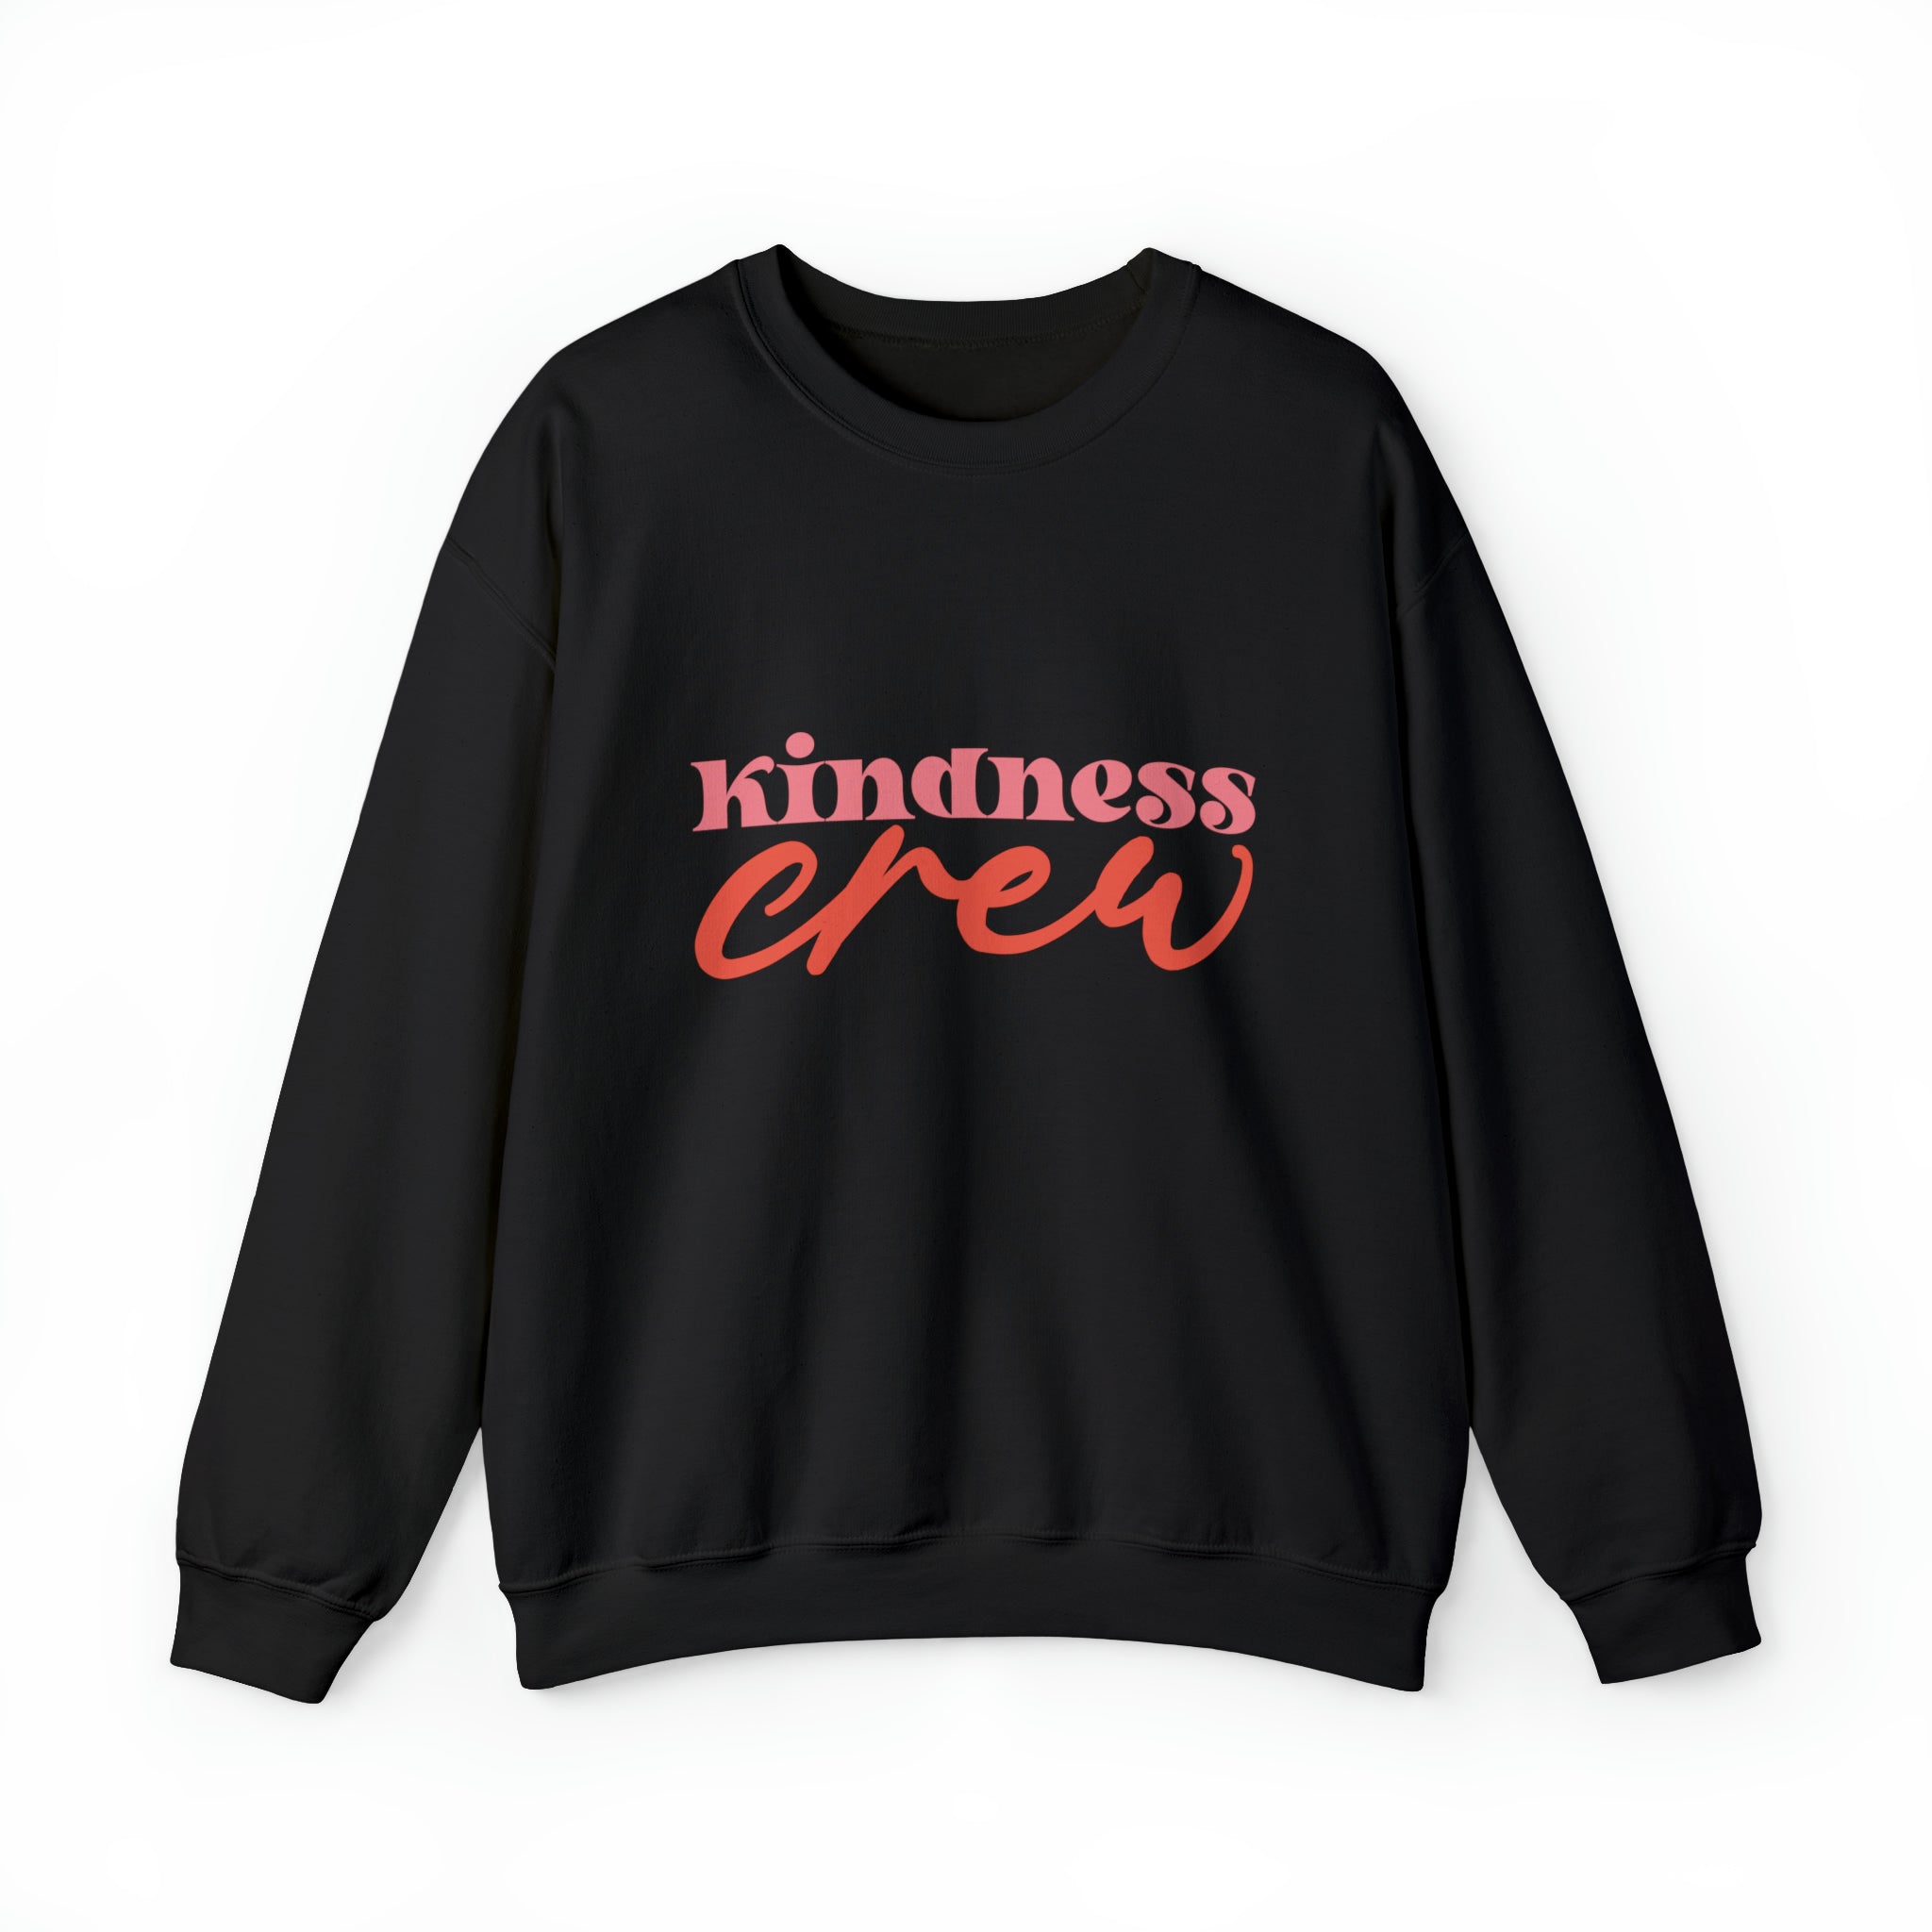 Kindness Crewneck Sweatshirt - Behibrid